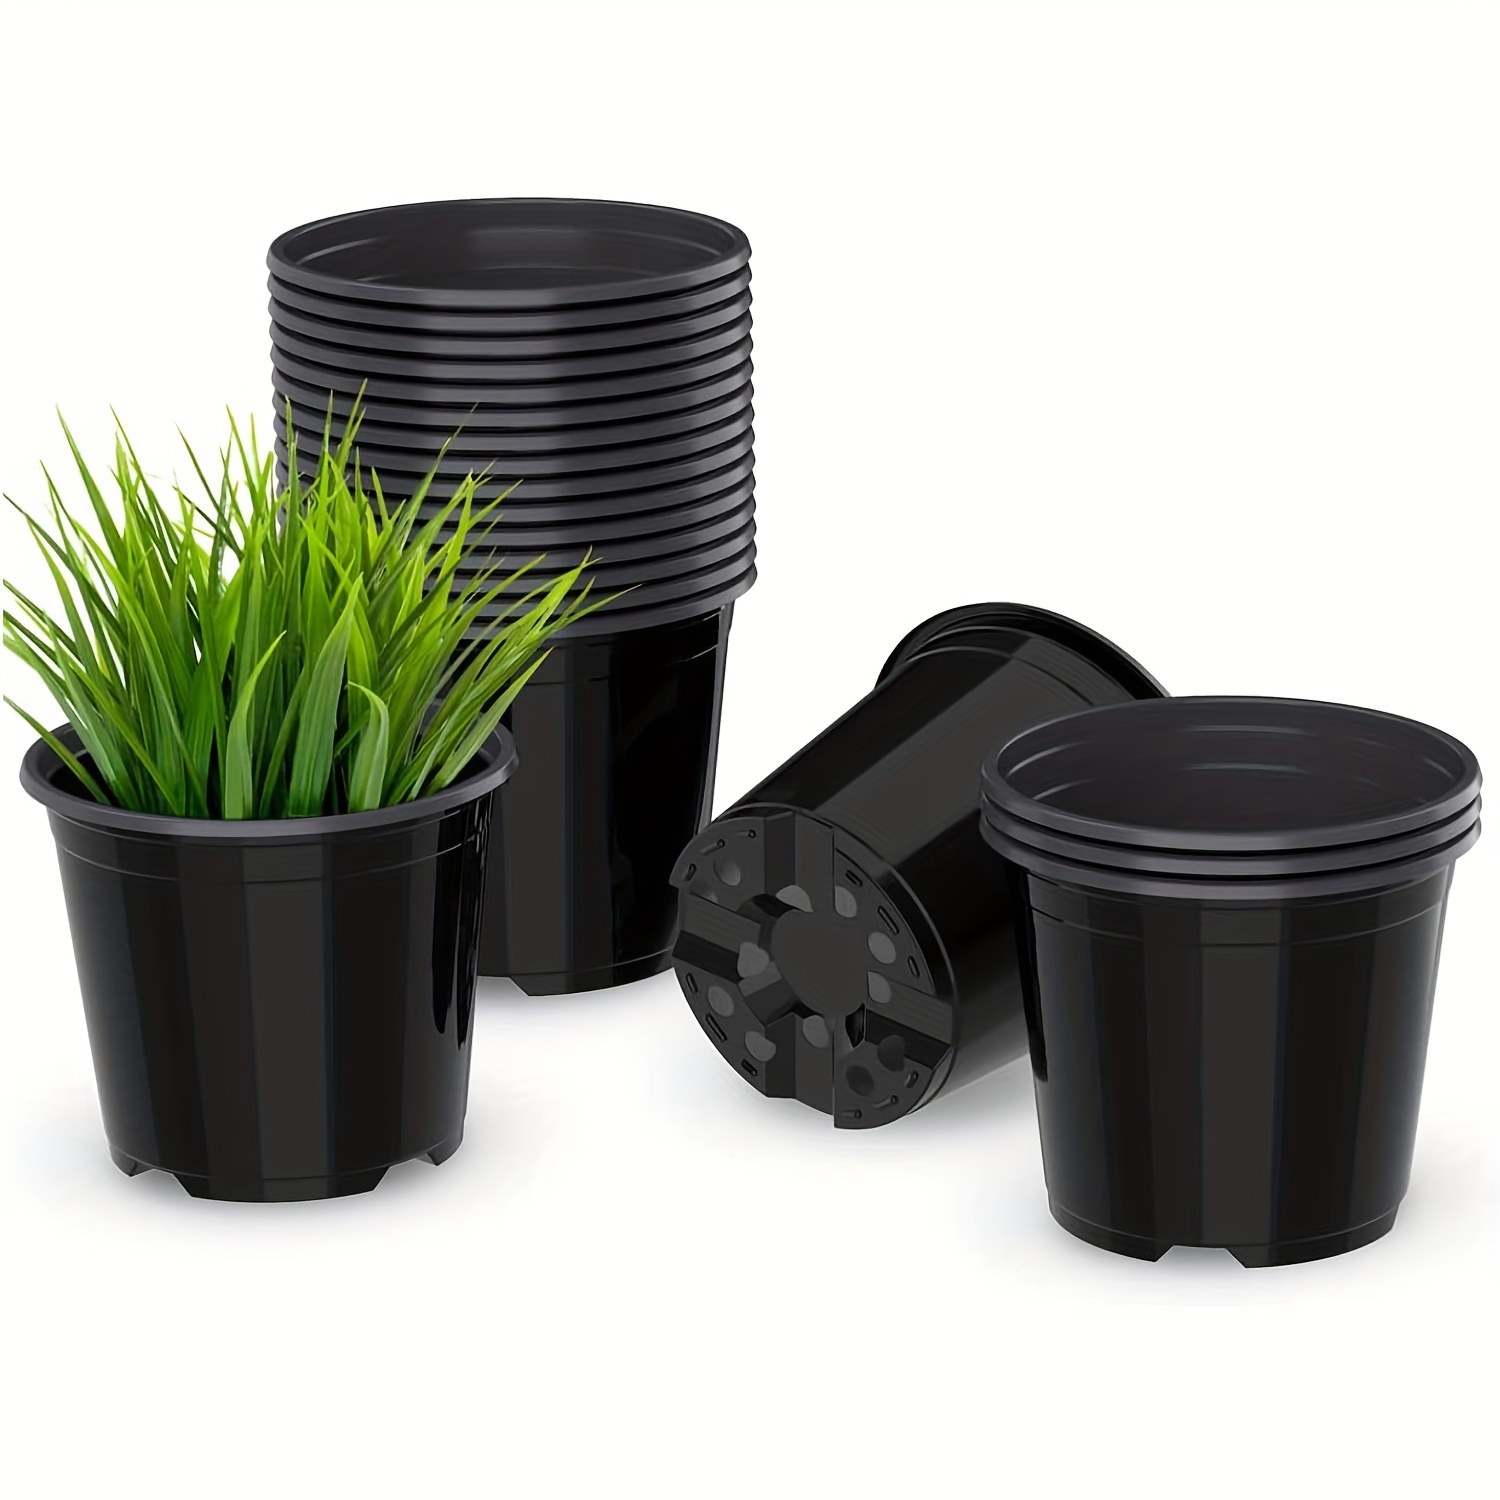 24/7 Garden 3-Gallon Grow Bags / Fabric Pots / Flower Planters (Black)  (5-Pack)